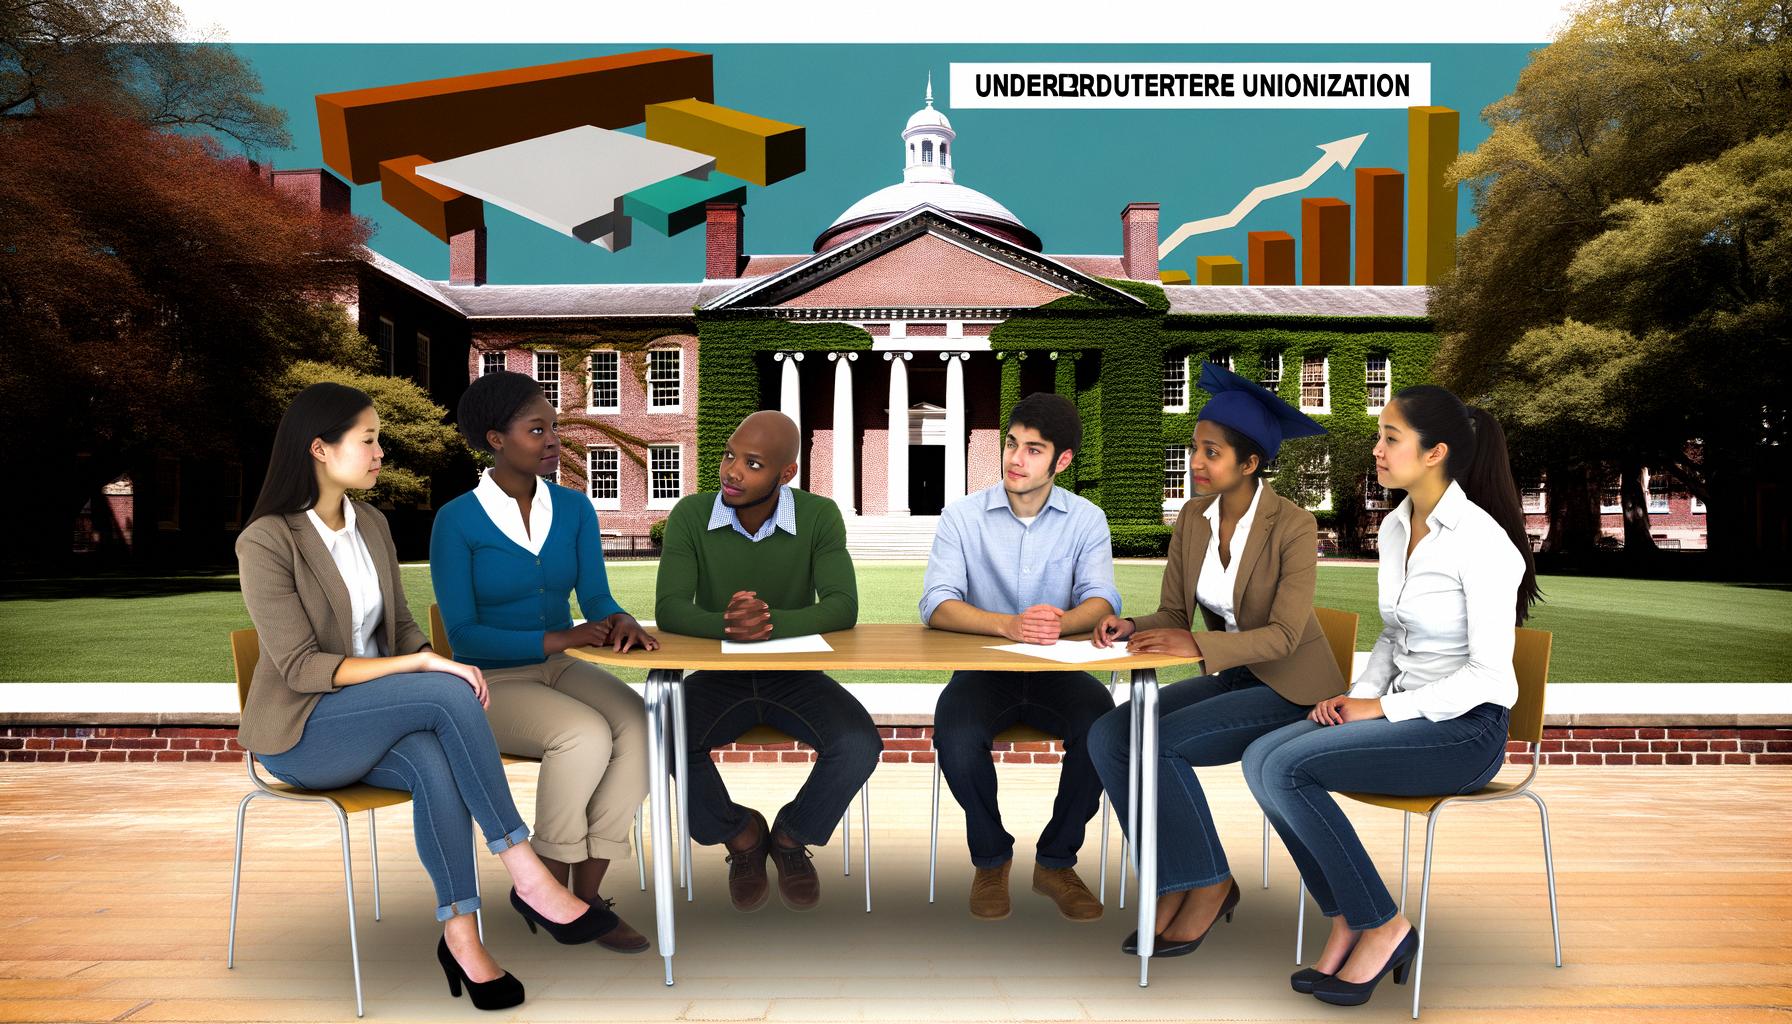 Growing undergraduate unionization in US universities